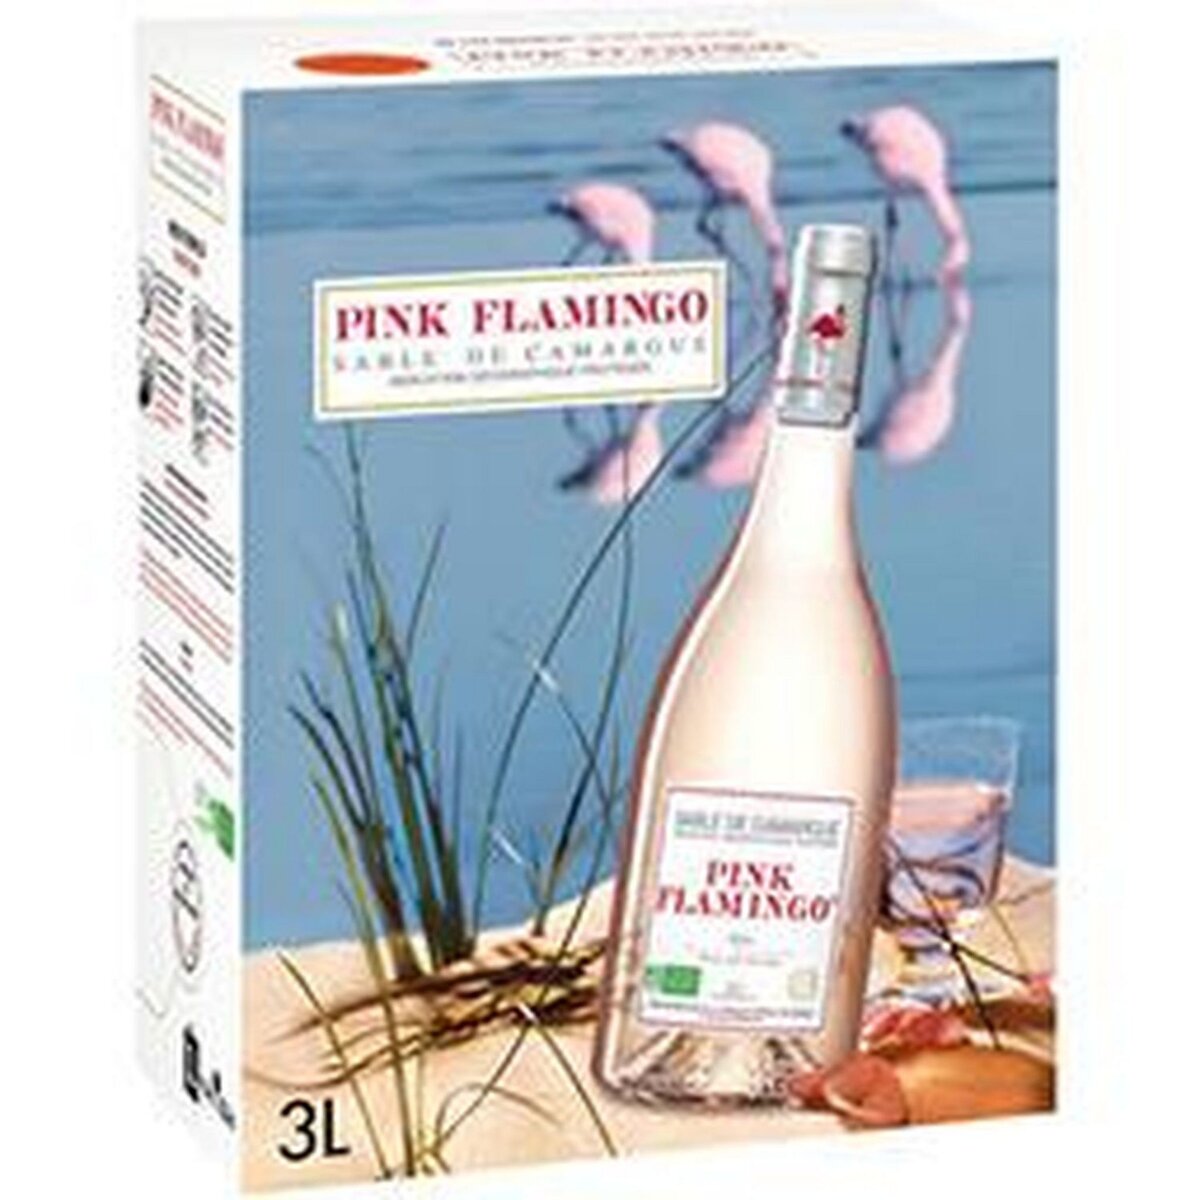 IGP Sable de Camargue Pink Flamingo rosé BIB 3L